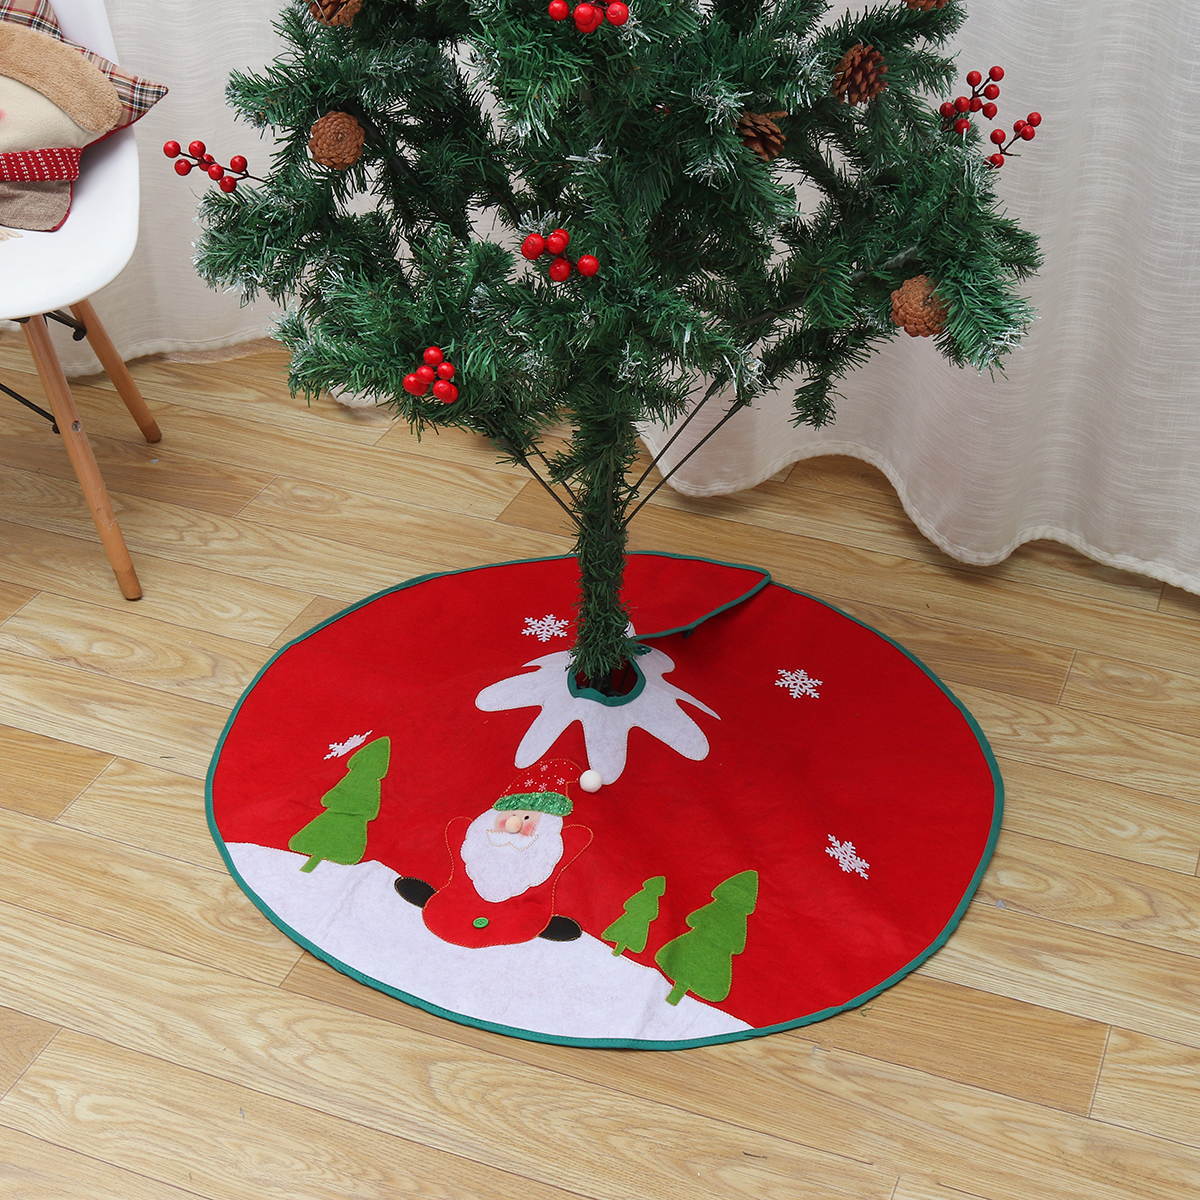 2020-Christmas-Decor-Santa-Claus-Christmas-Tree-Skirt-Aprons-New-Year-Xmas-Tree-Carpet-Foot-Cover-fo-1770951-10